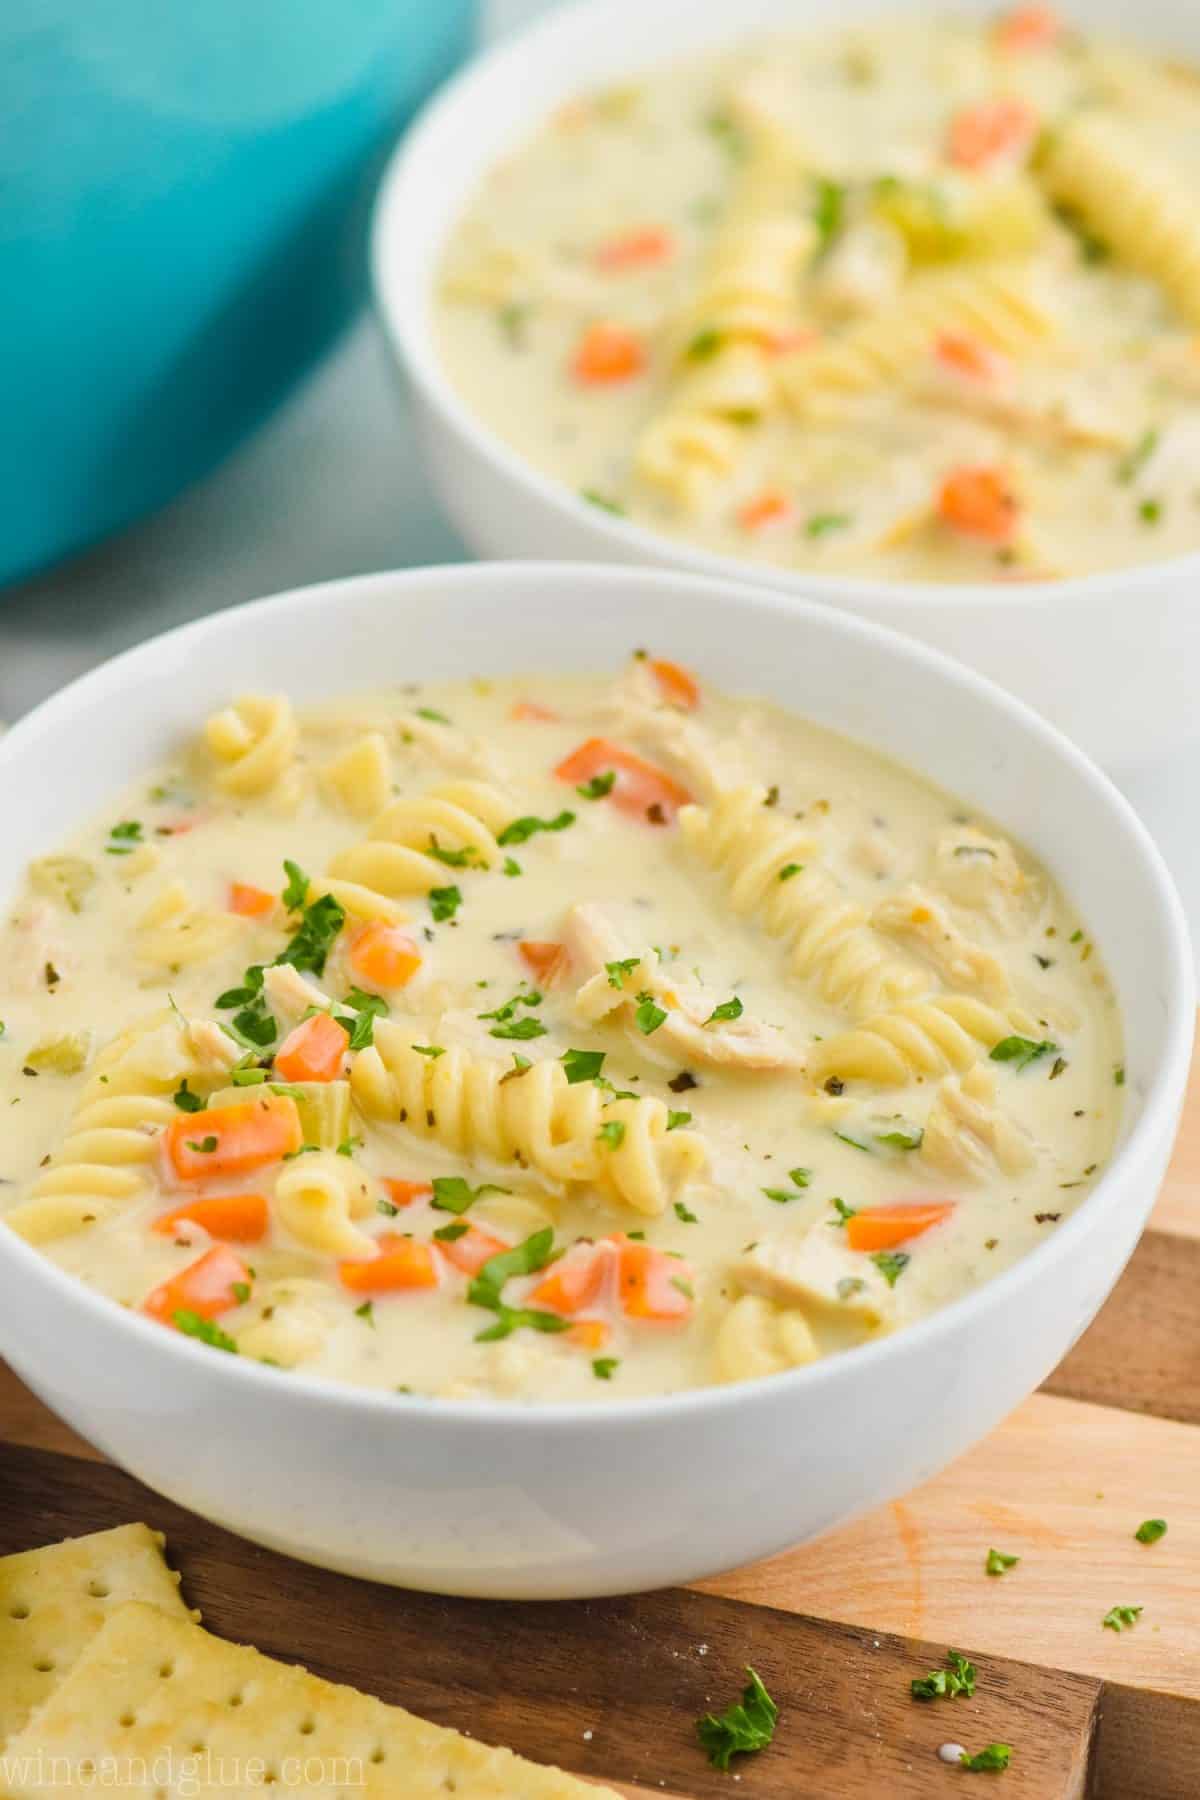 https://www.simplejoy.com/wp-content/uploads/2020/01/creamy_chicken_noodle_soup.jpg